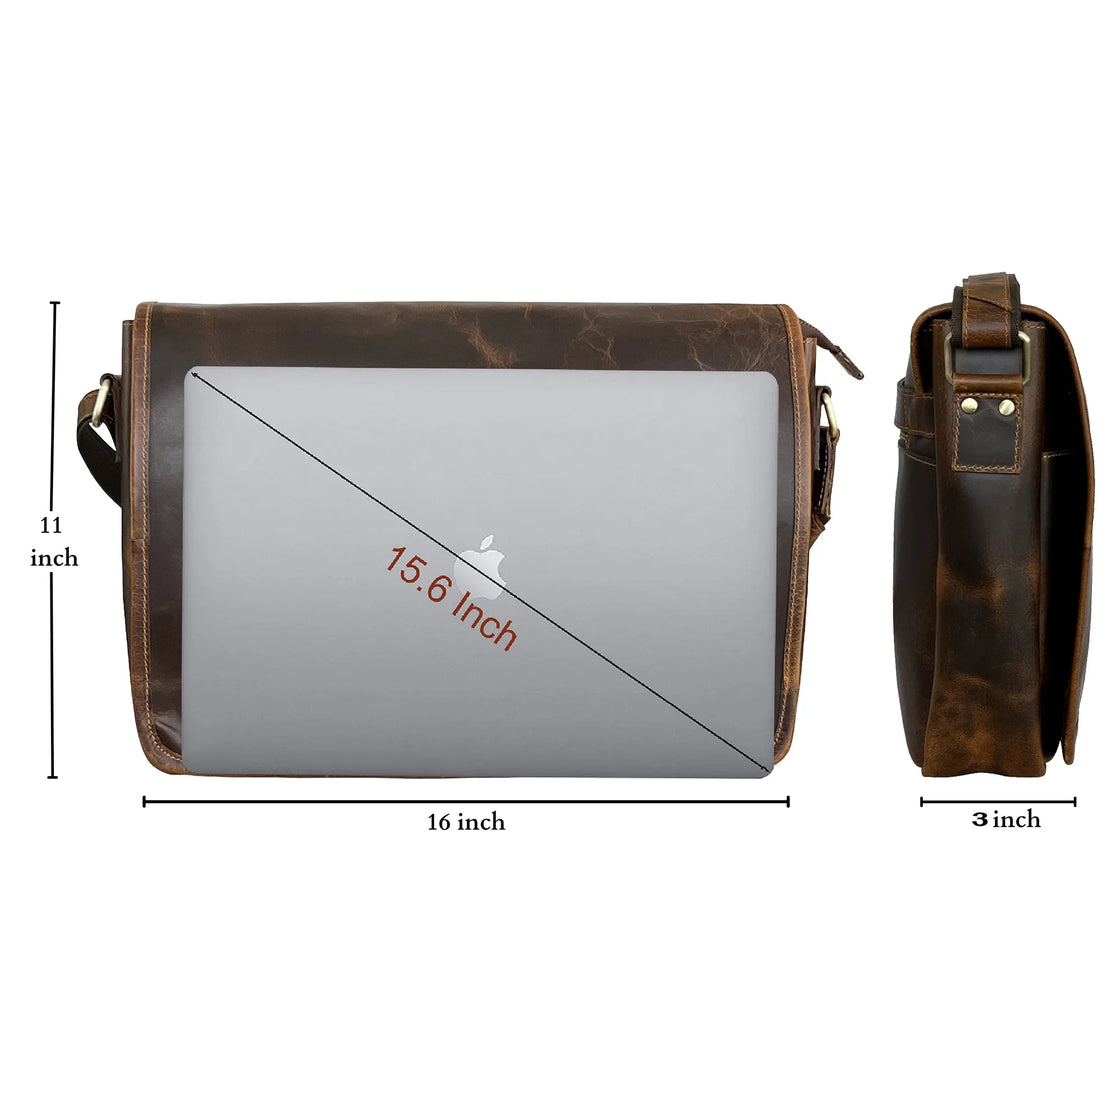 Mens Crossbody Shoulder Satchel Bag for 14 Inches Laptop, Large Size, Brown